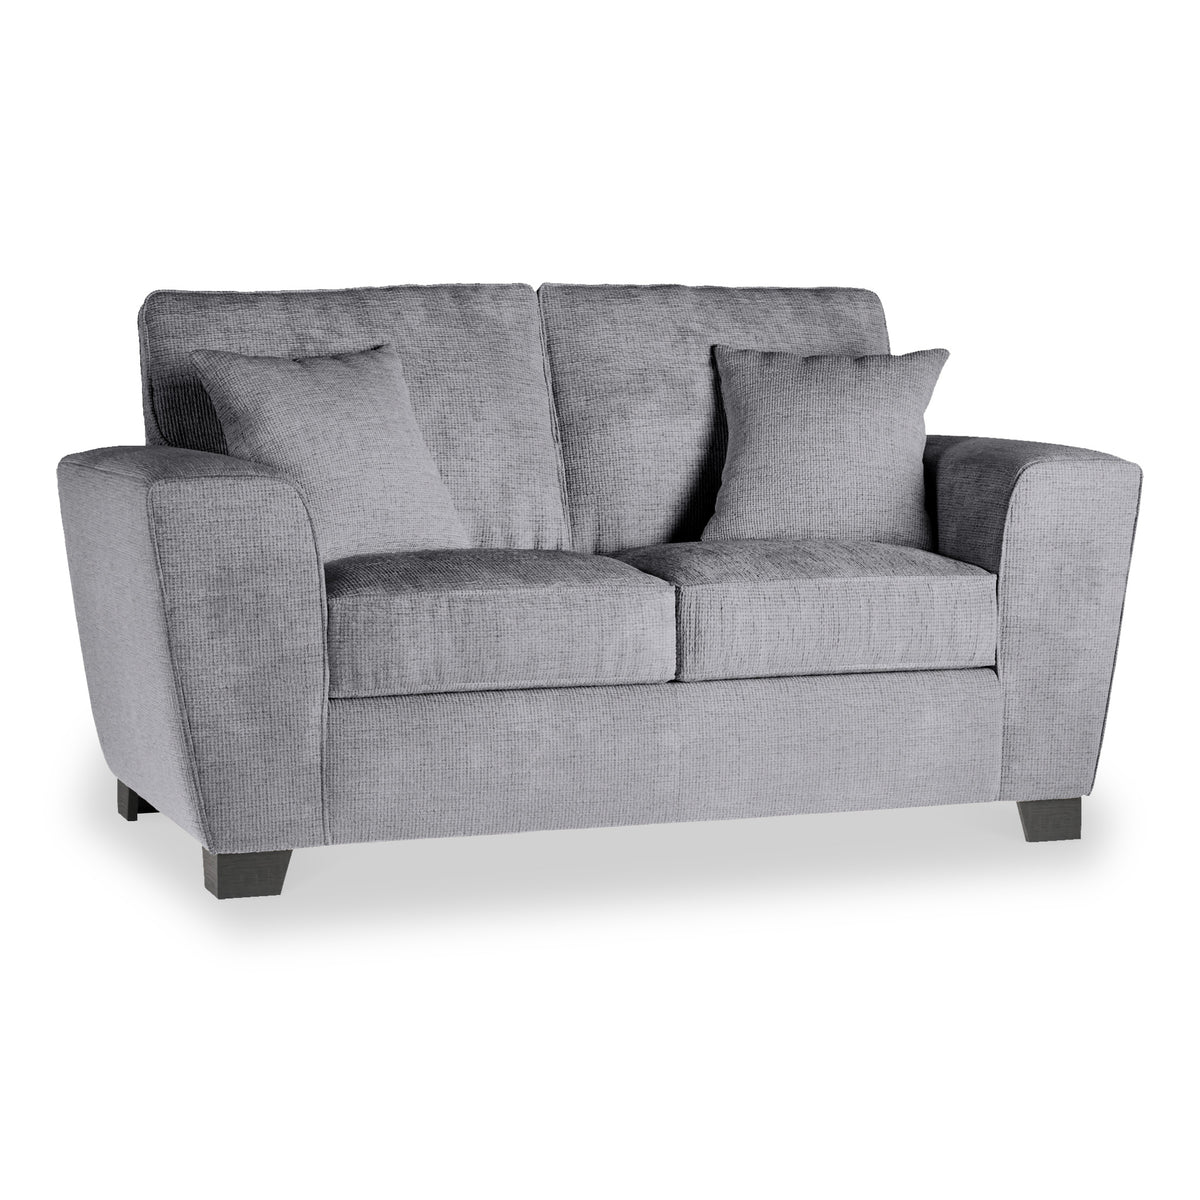 Chester Slate Hopsack 2 Seater Sofa from Roseland Furniture